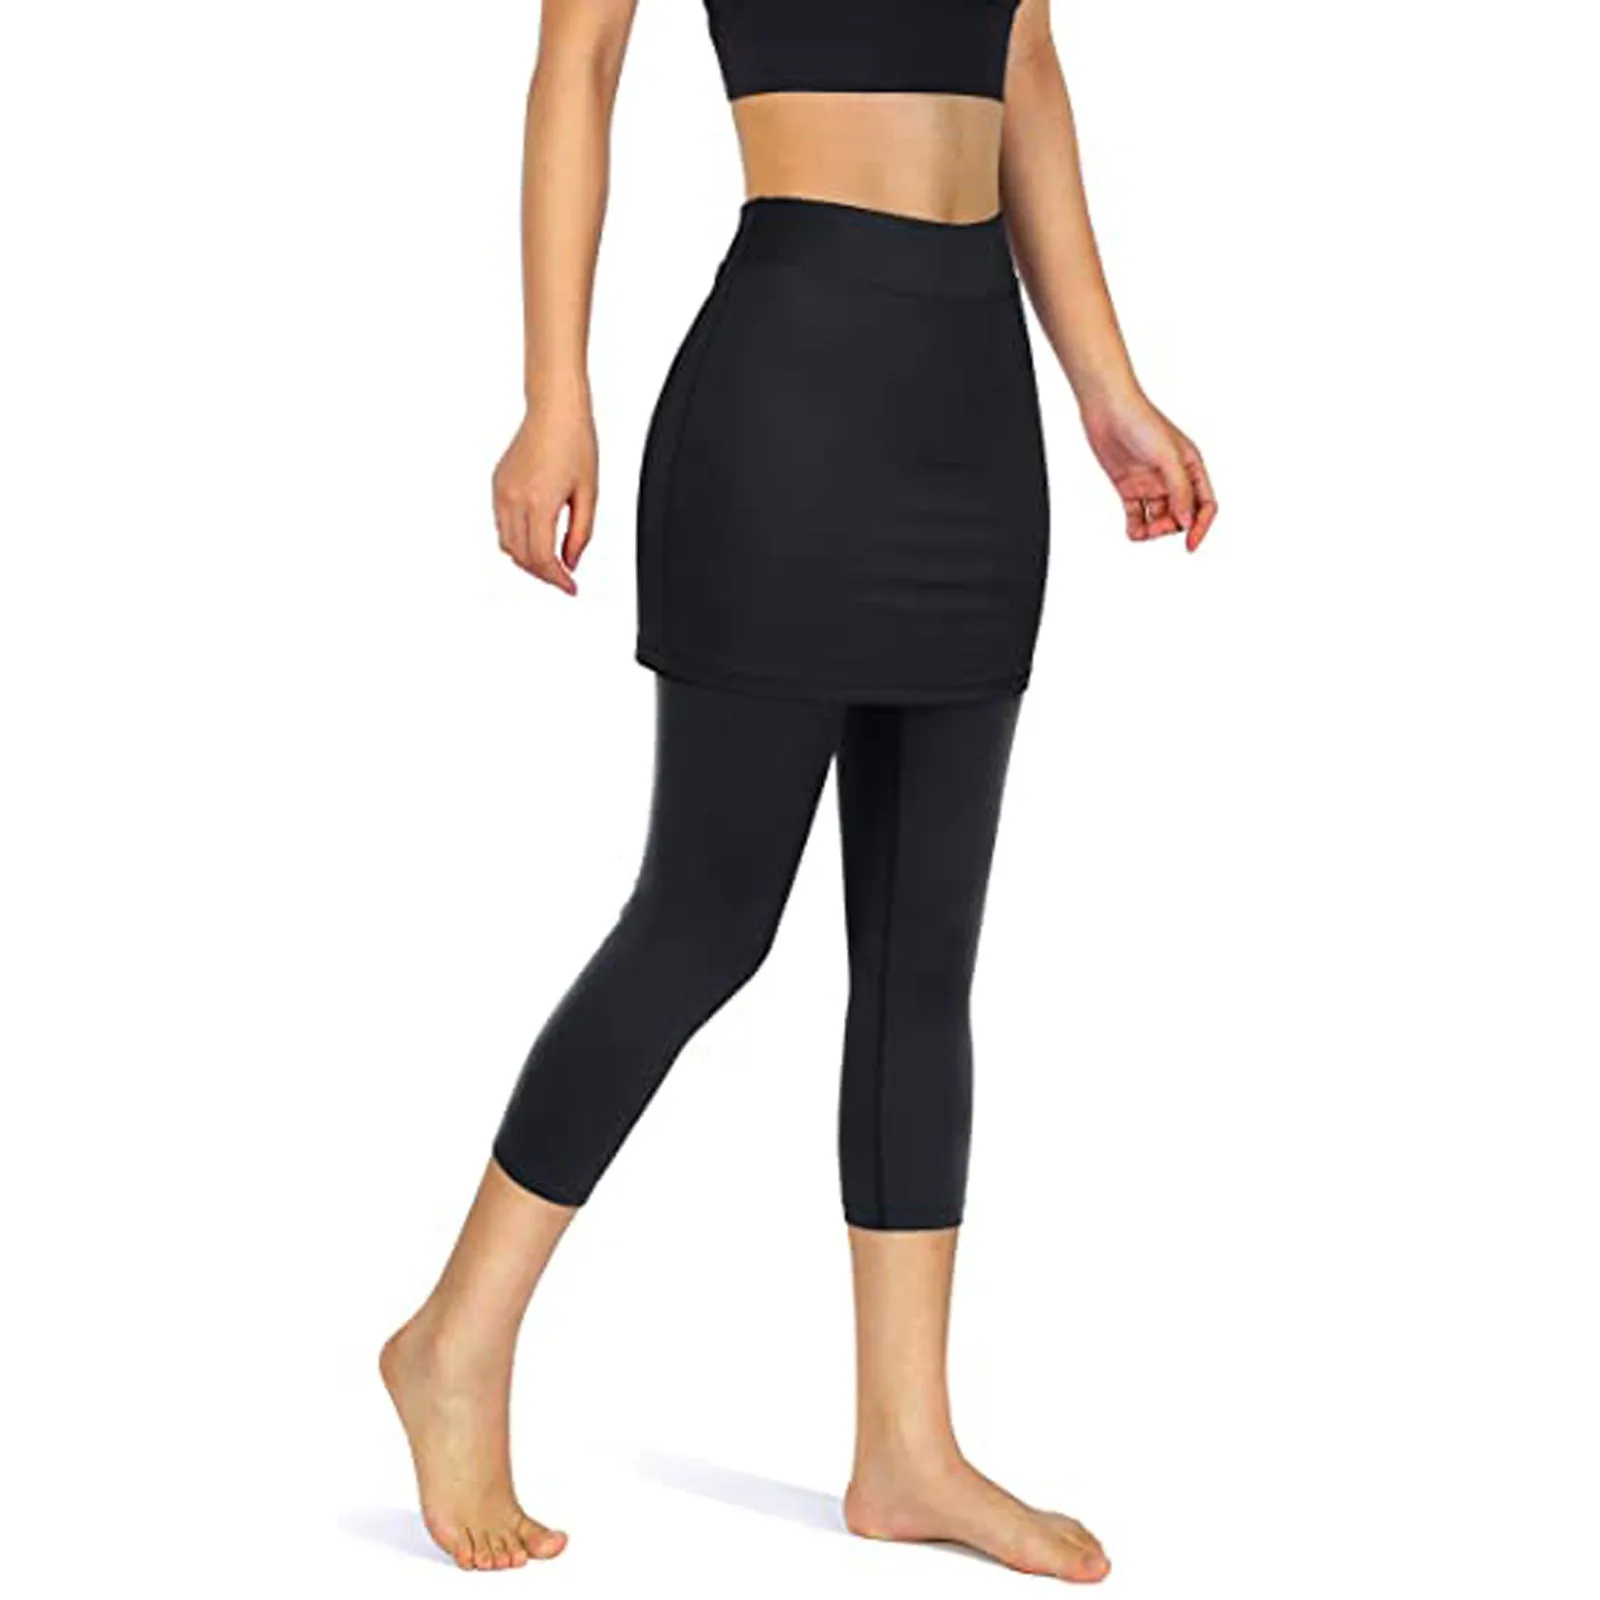 Women Fitness Leggings With Pockets Tennis Skirted Legging Pantalones Pocket Elastic Sports Workout Capris Skirts Leggins Mujer grey leggings